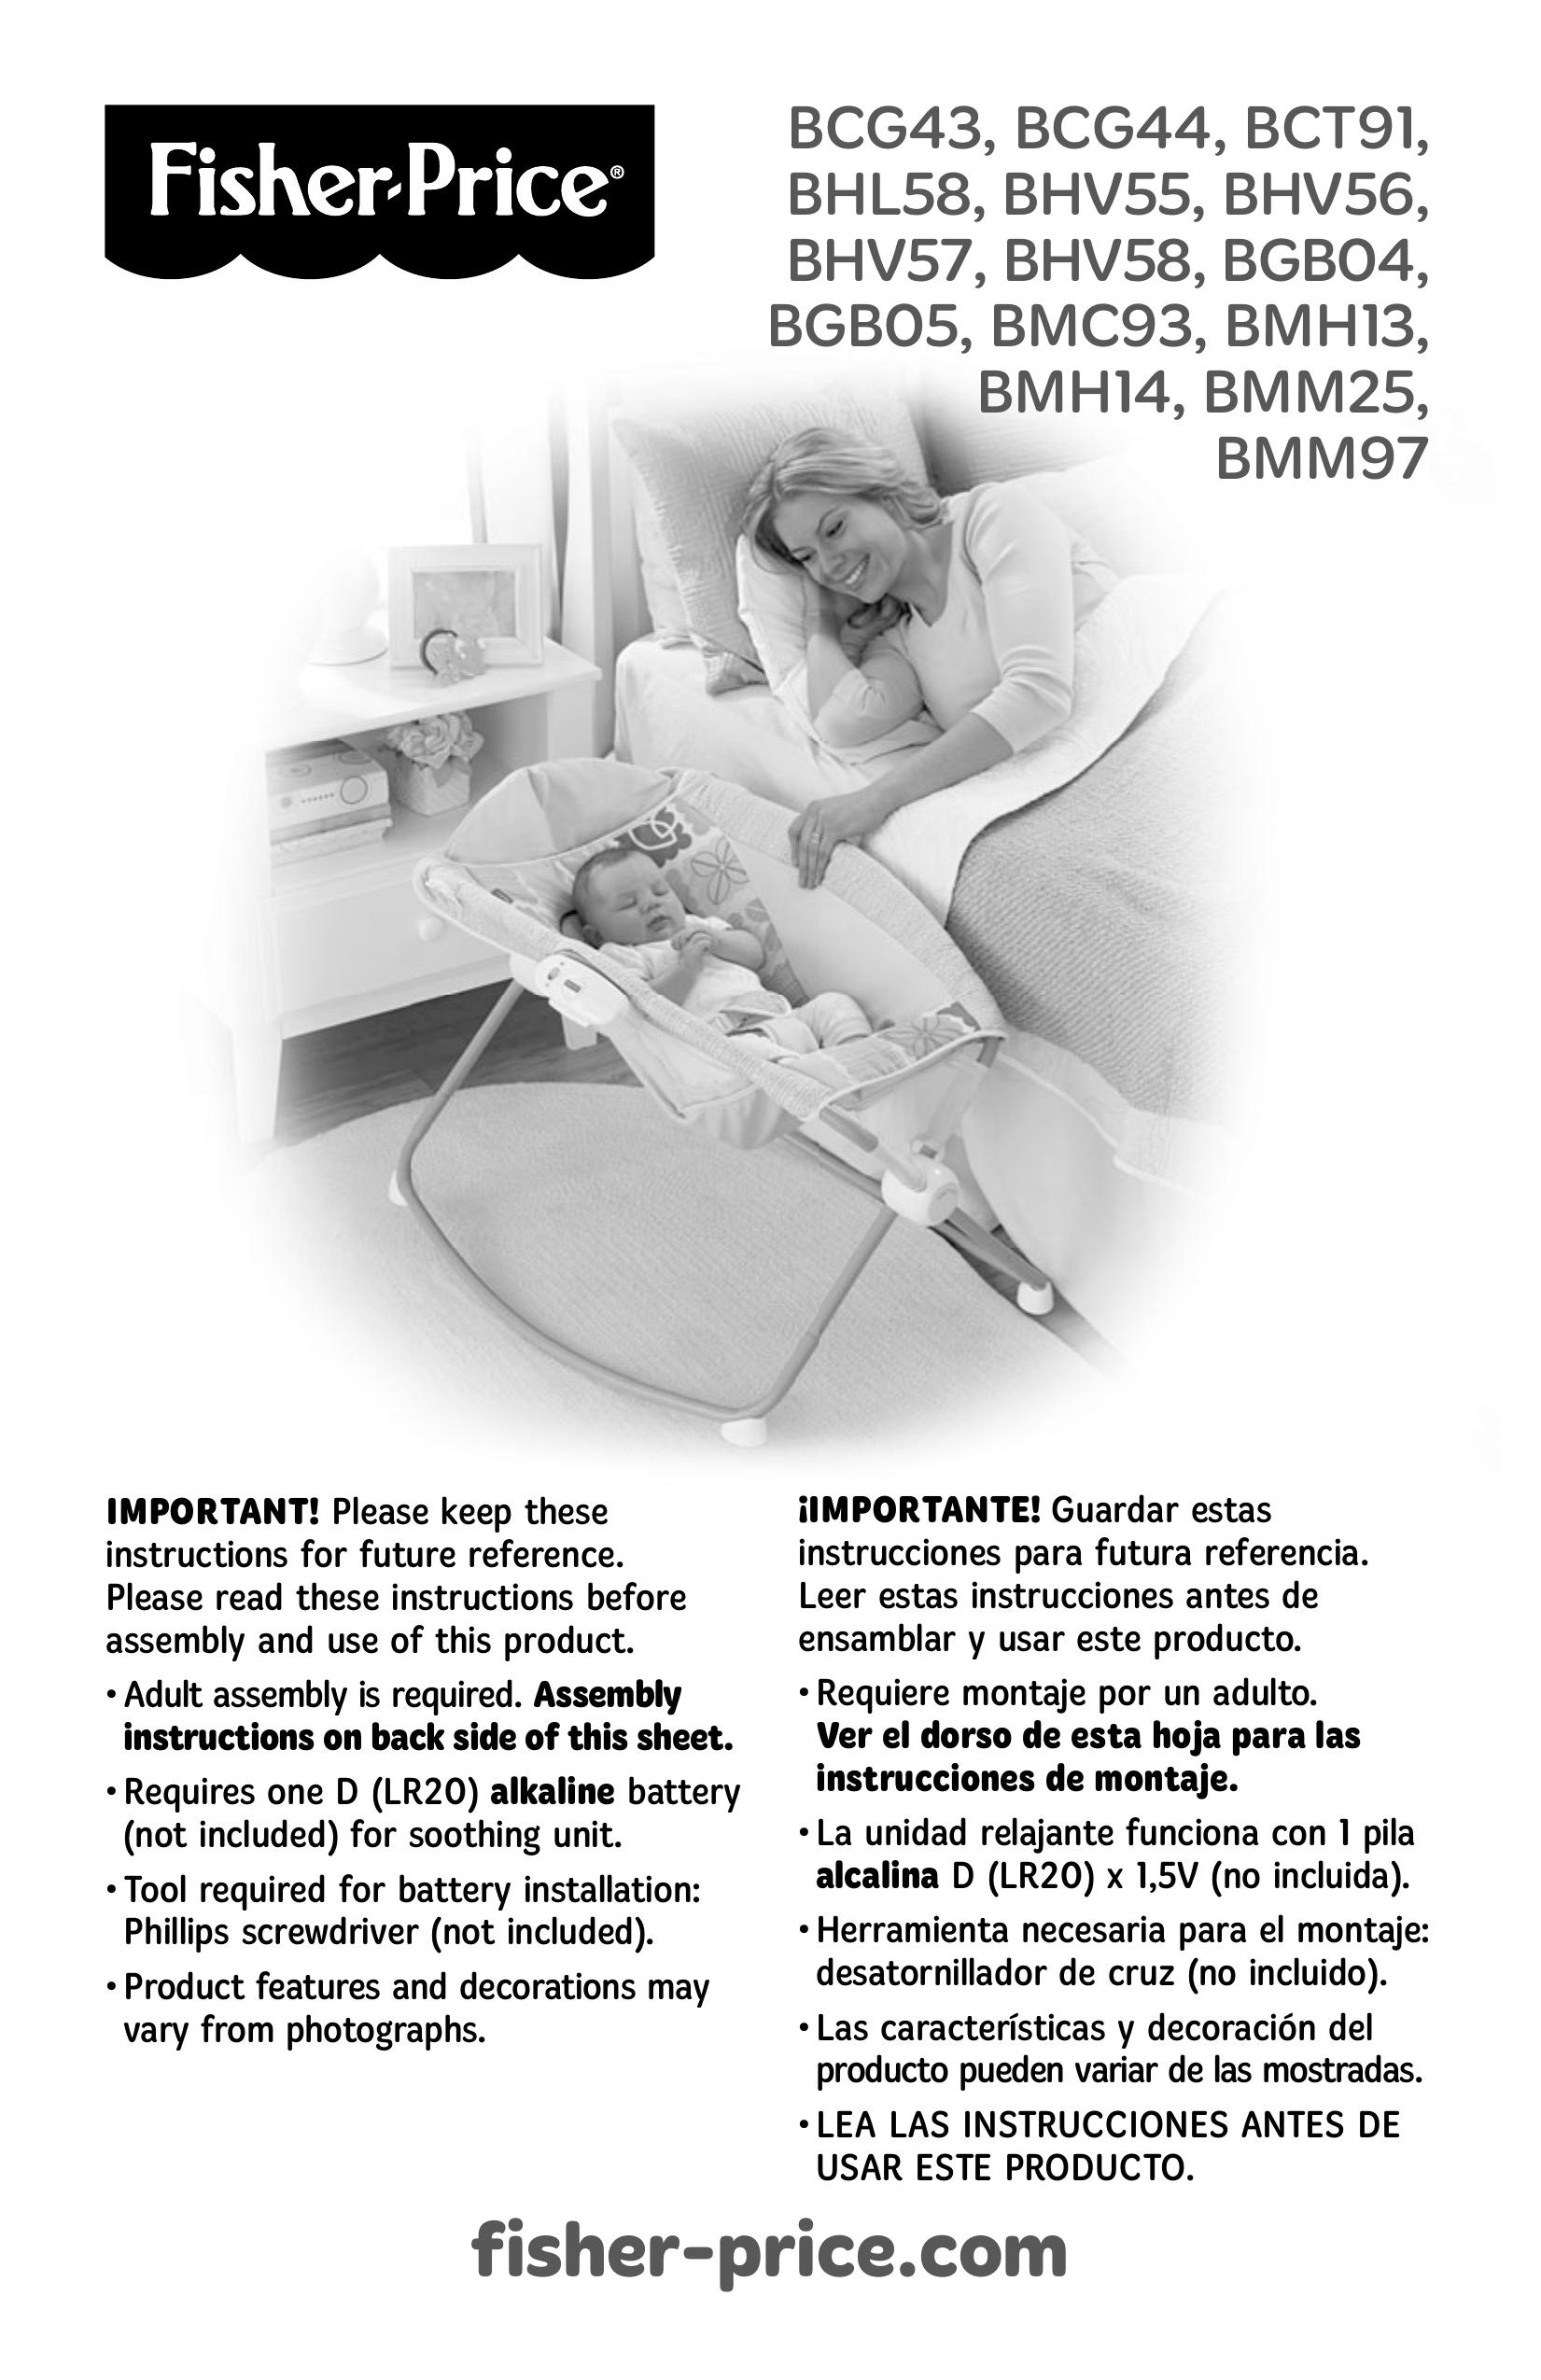 Fisher-Price BMH14 Sleep Apnea Machine User Manual